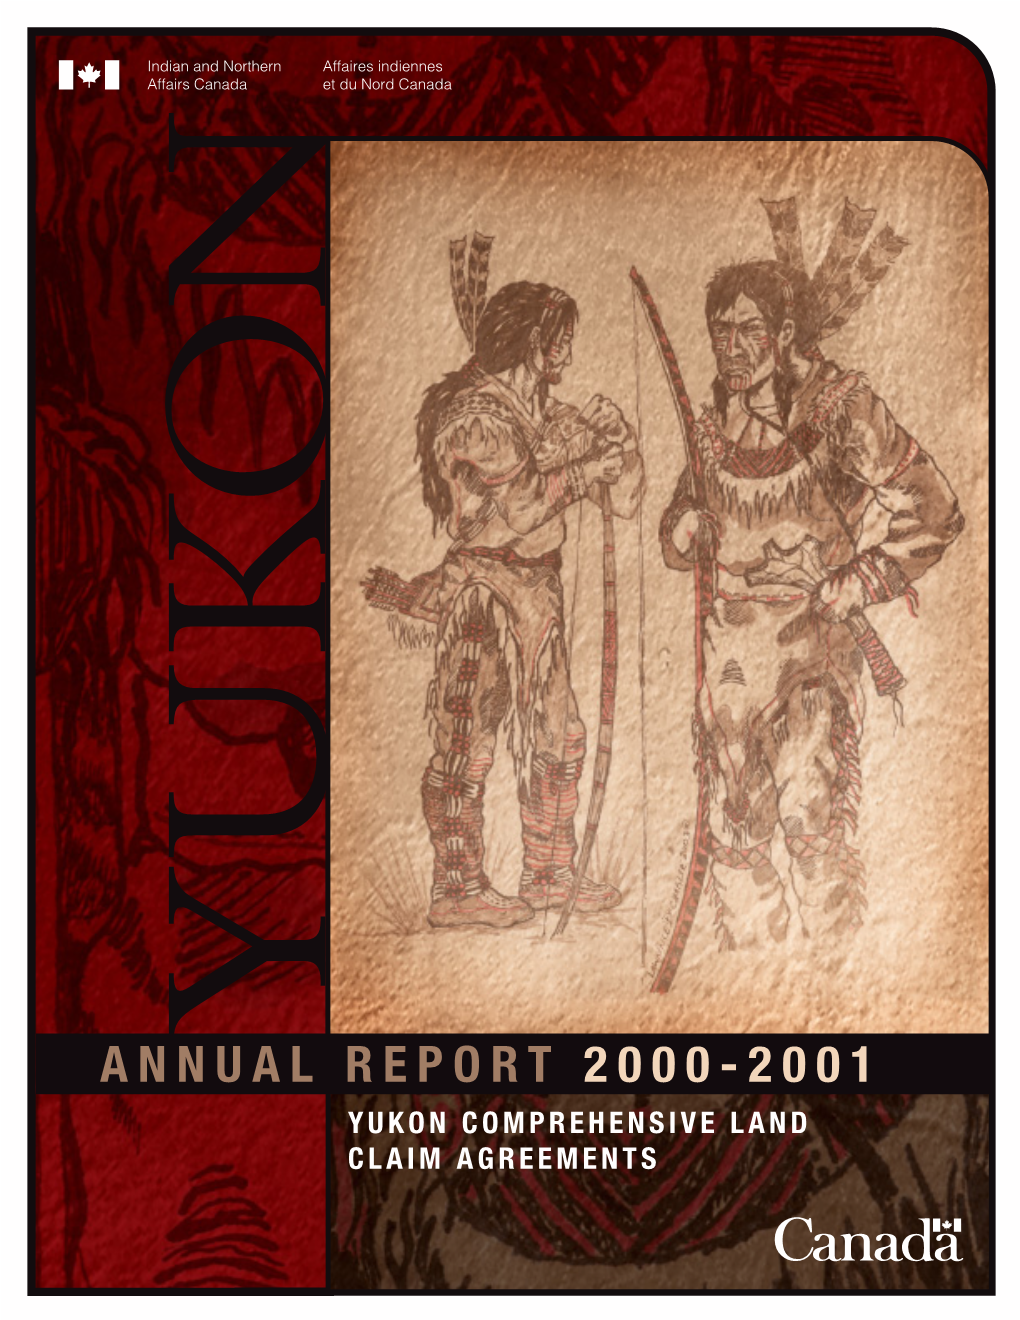 YUKON COMPREHENSIVE LAND CLAIM AGREEMENTS Lawrence Charlie Old Crow, Yukon Northern Hunters,2003 Ink Drawing